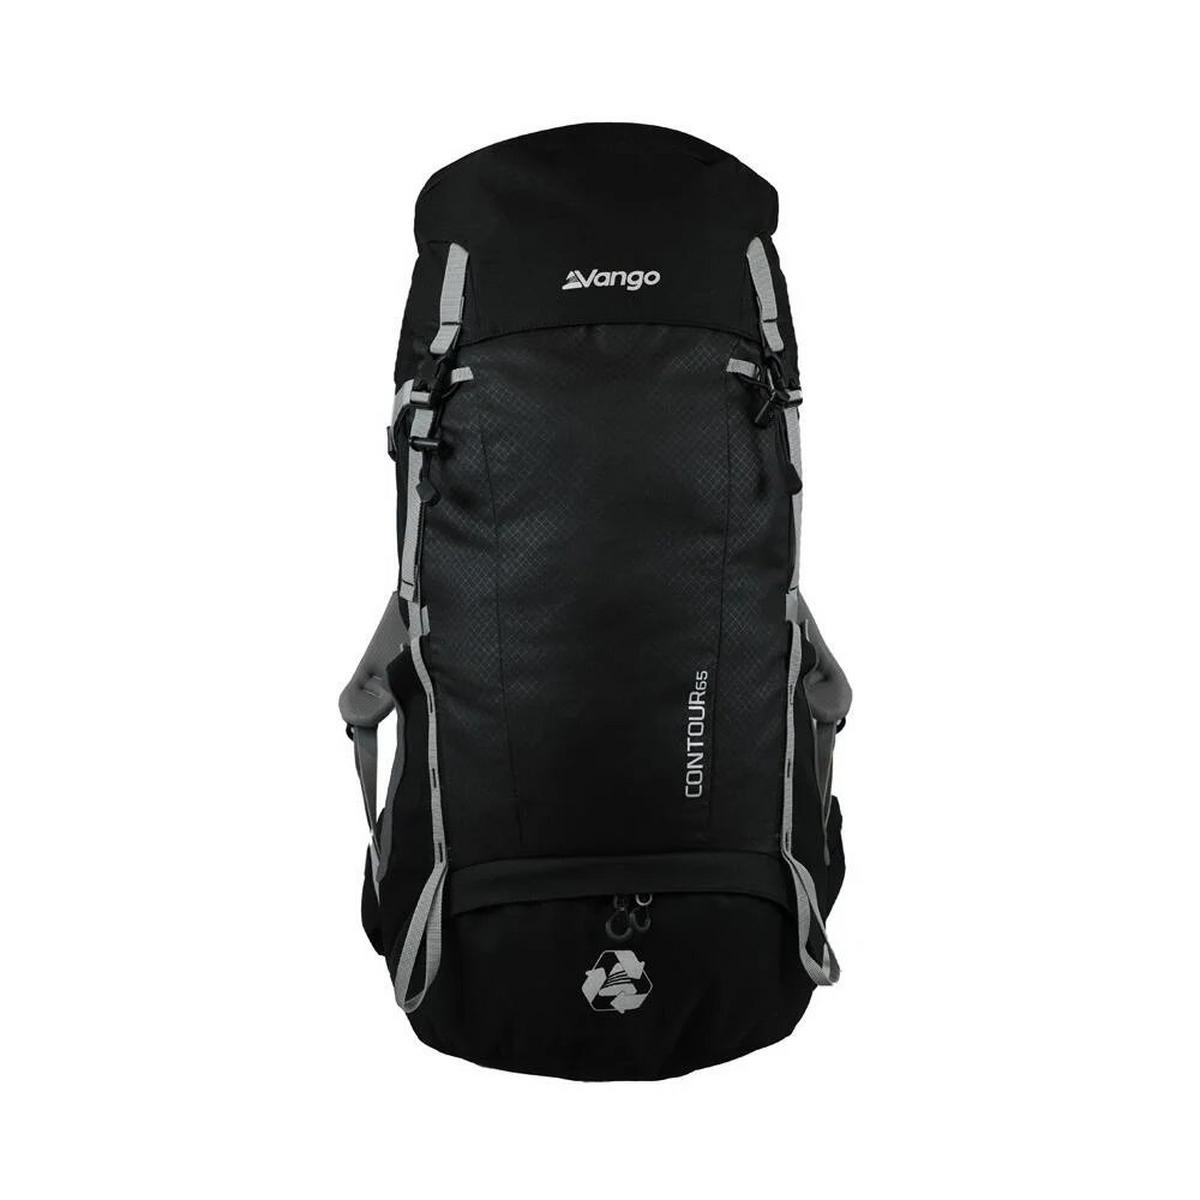 Vango Contour 65 Backpack - Black